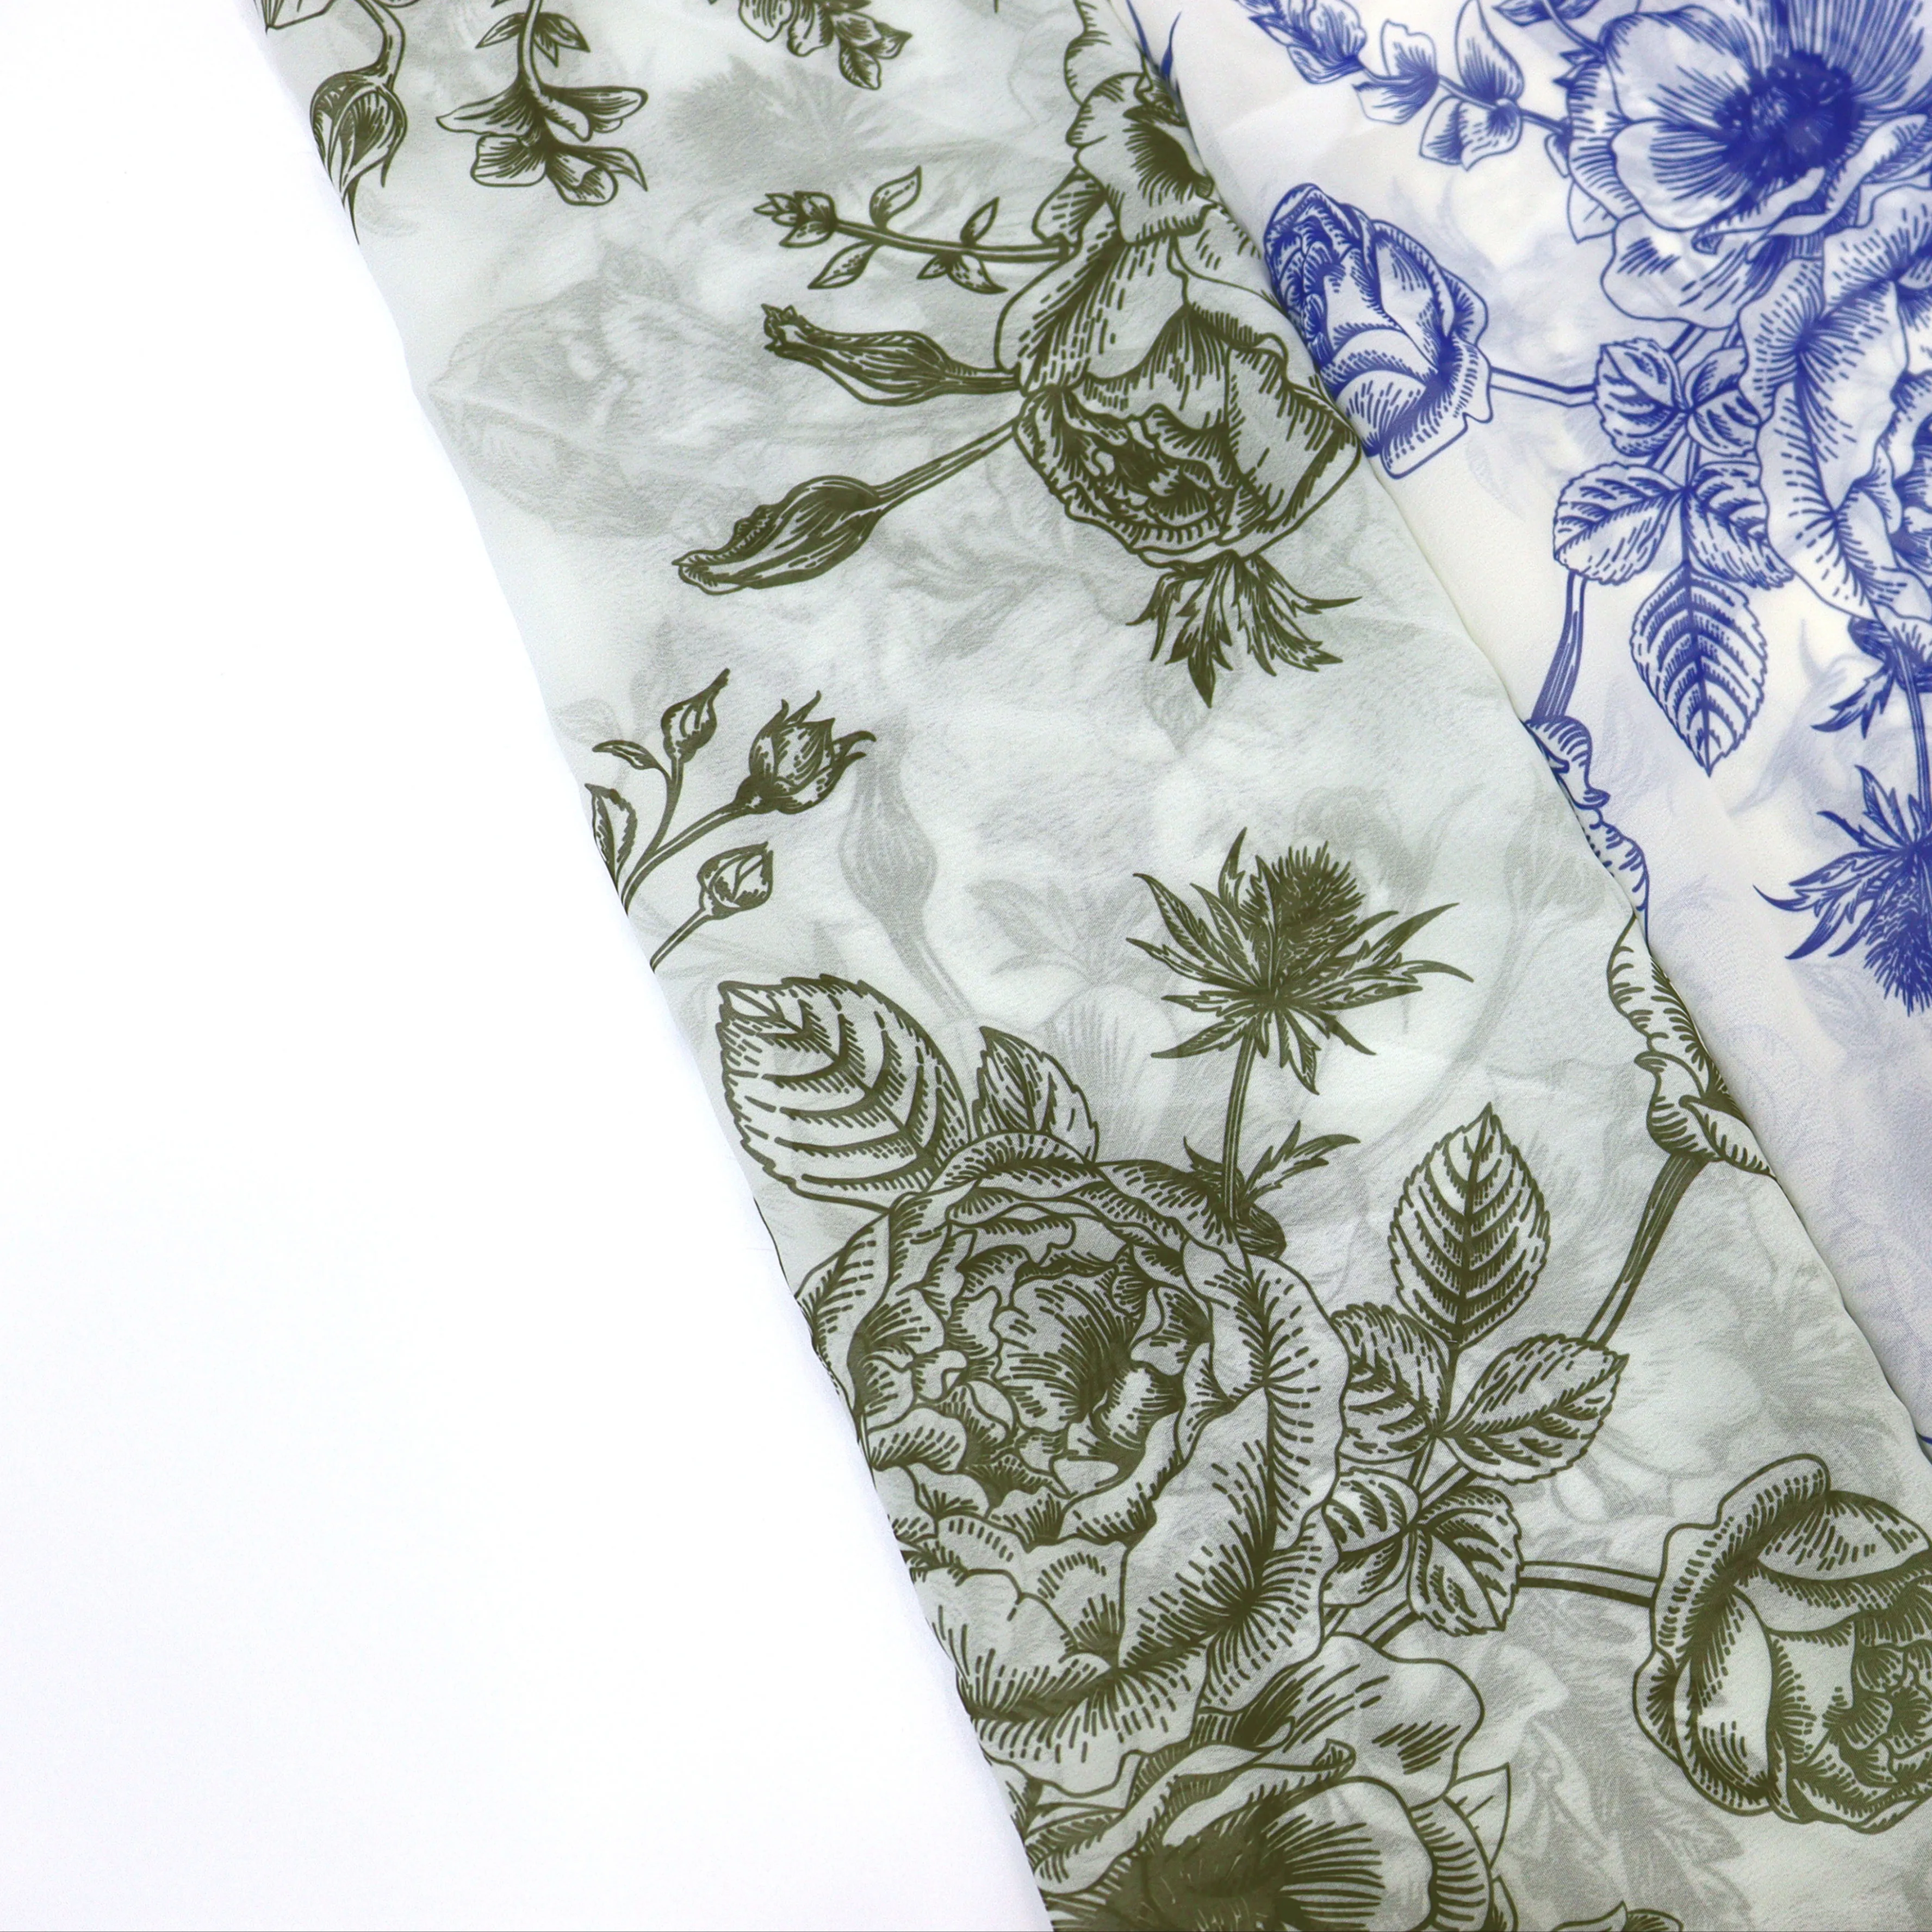 Dekorasi tirai sifon biru kain poliester 100% kain sifon cetak bunga untuk gaun wanita